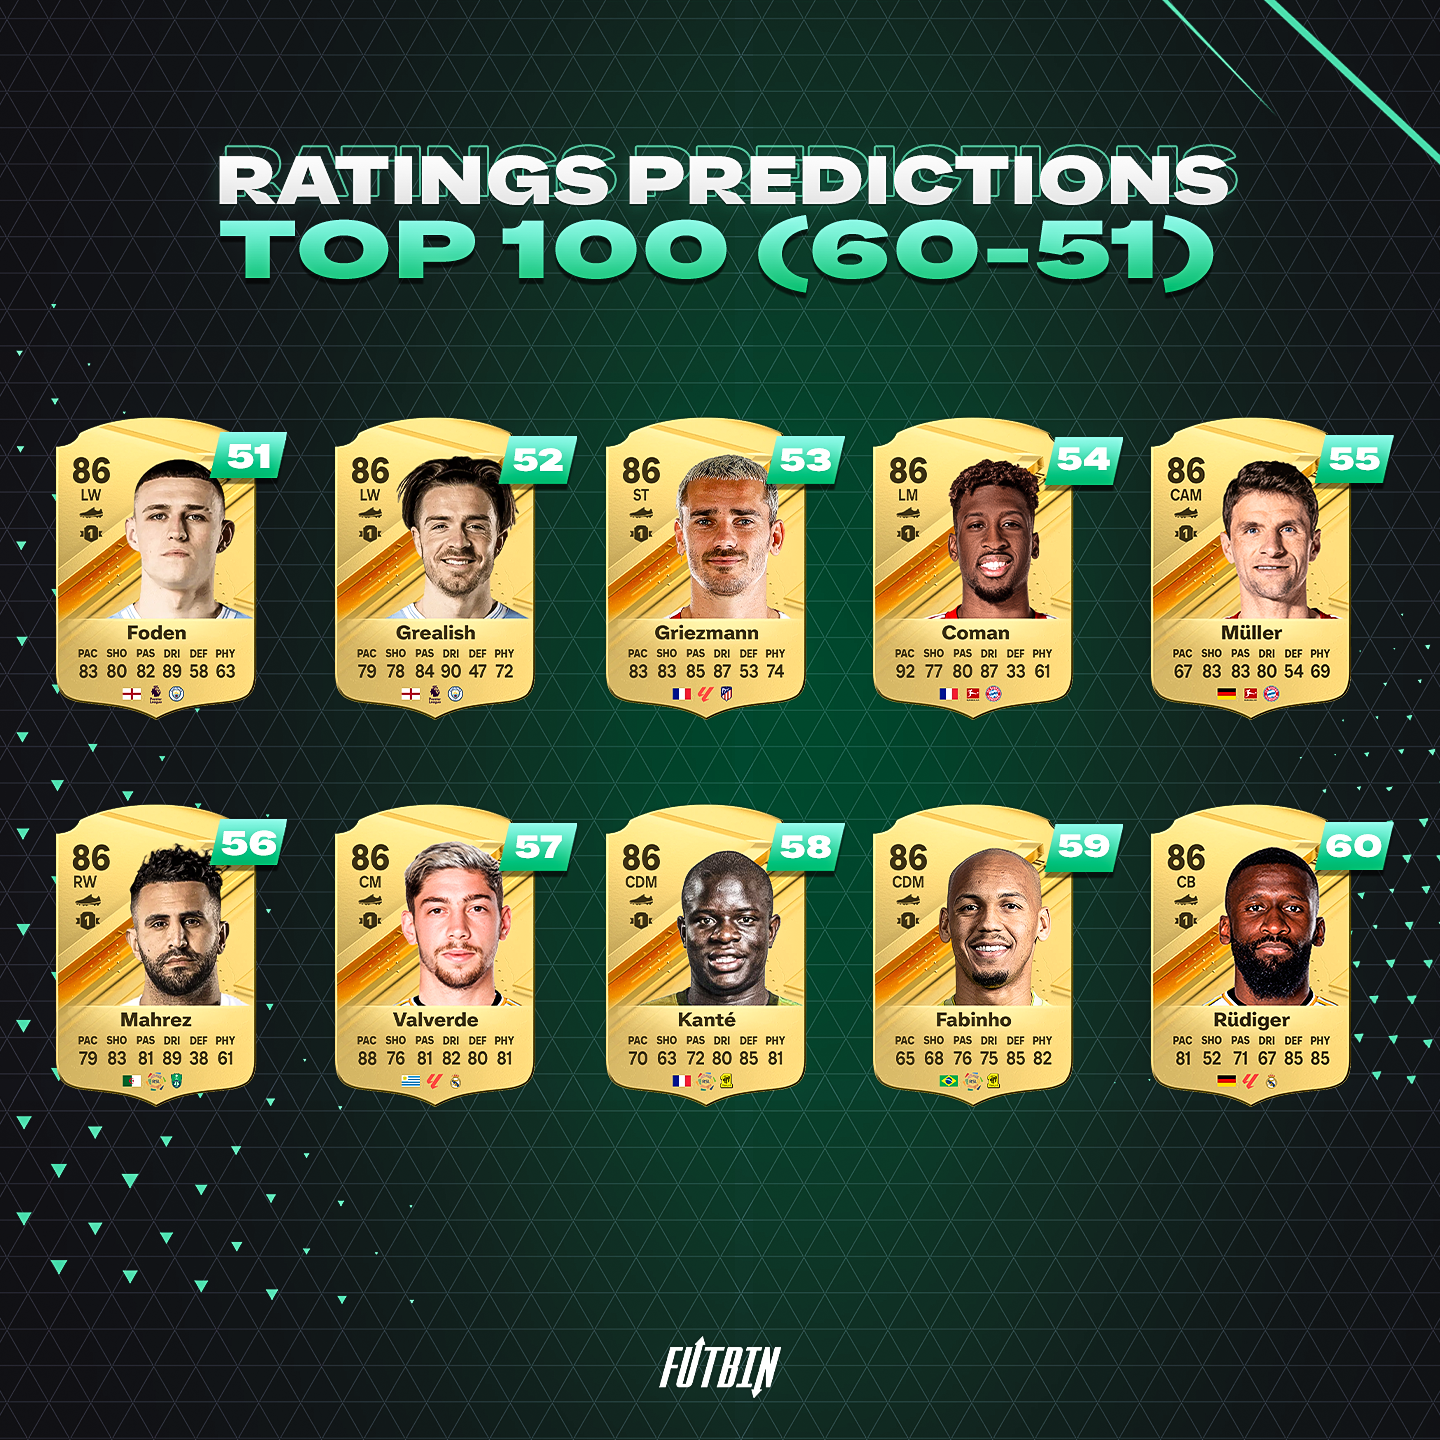 FIFA 22 - Players, Rating, Gameplay, Prediction & More